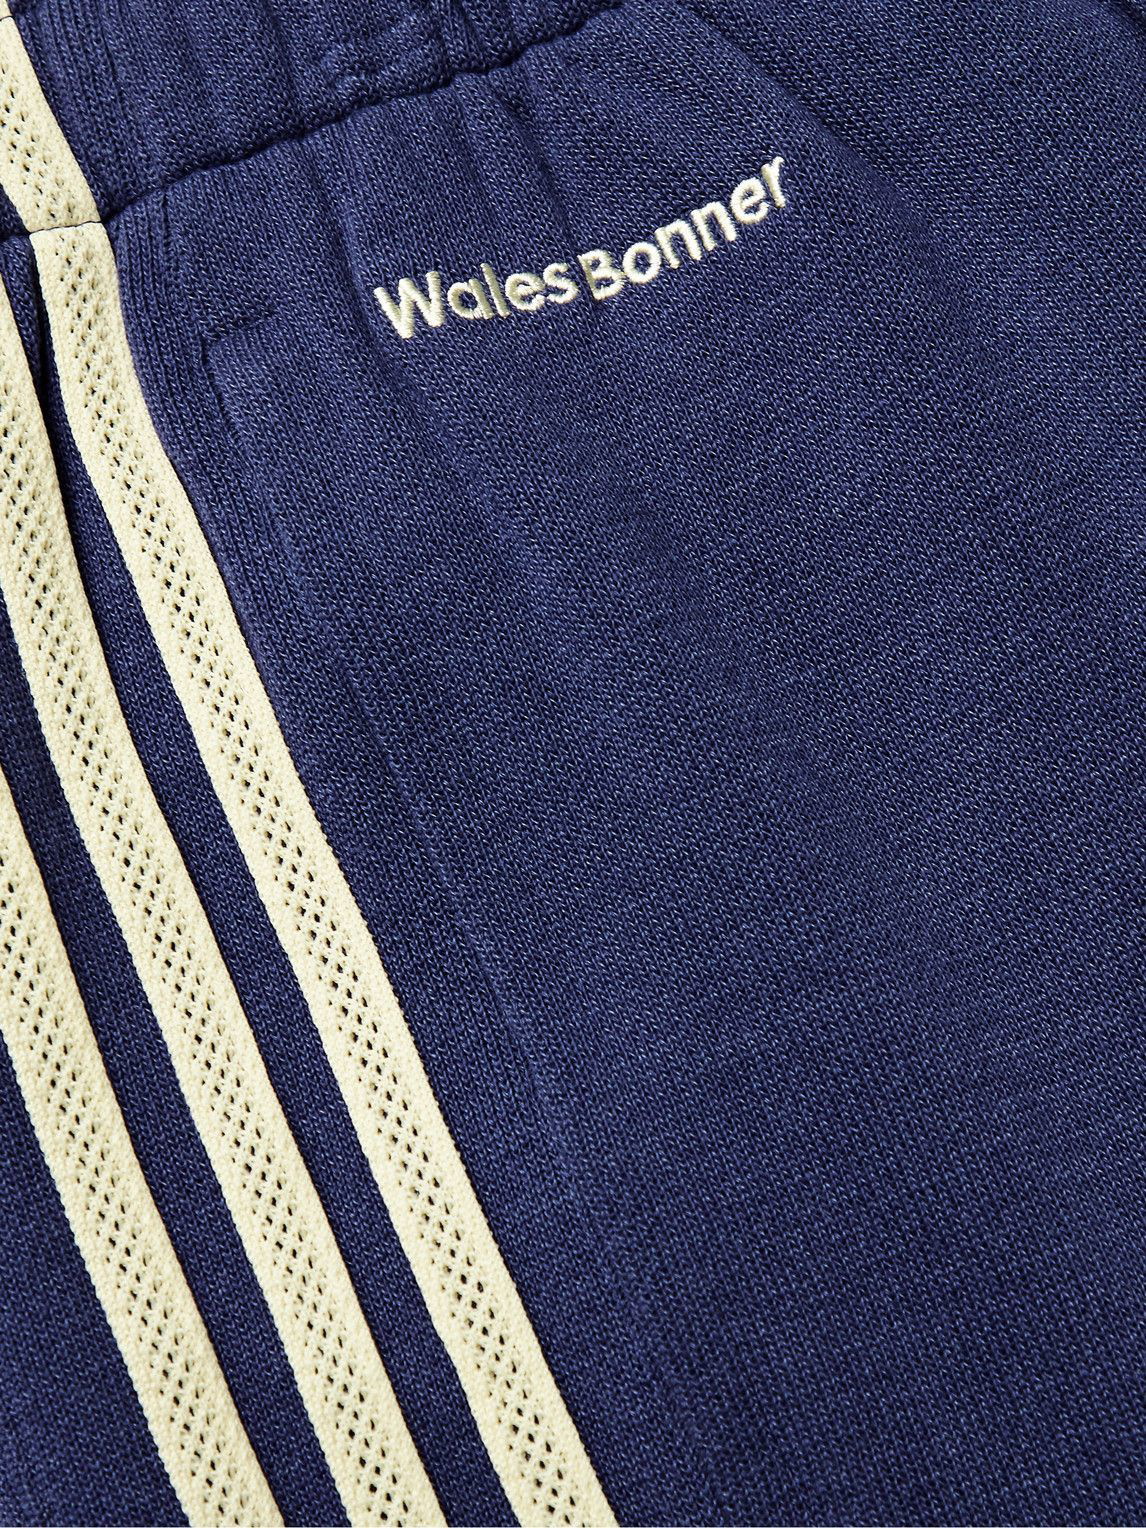 adidas Consortium - Wales Bonner Striped Tech-Jersey Track Jacket - Yellow  adidas Consortium